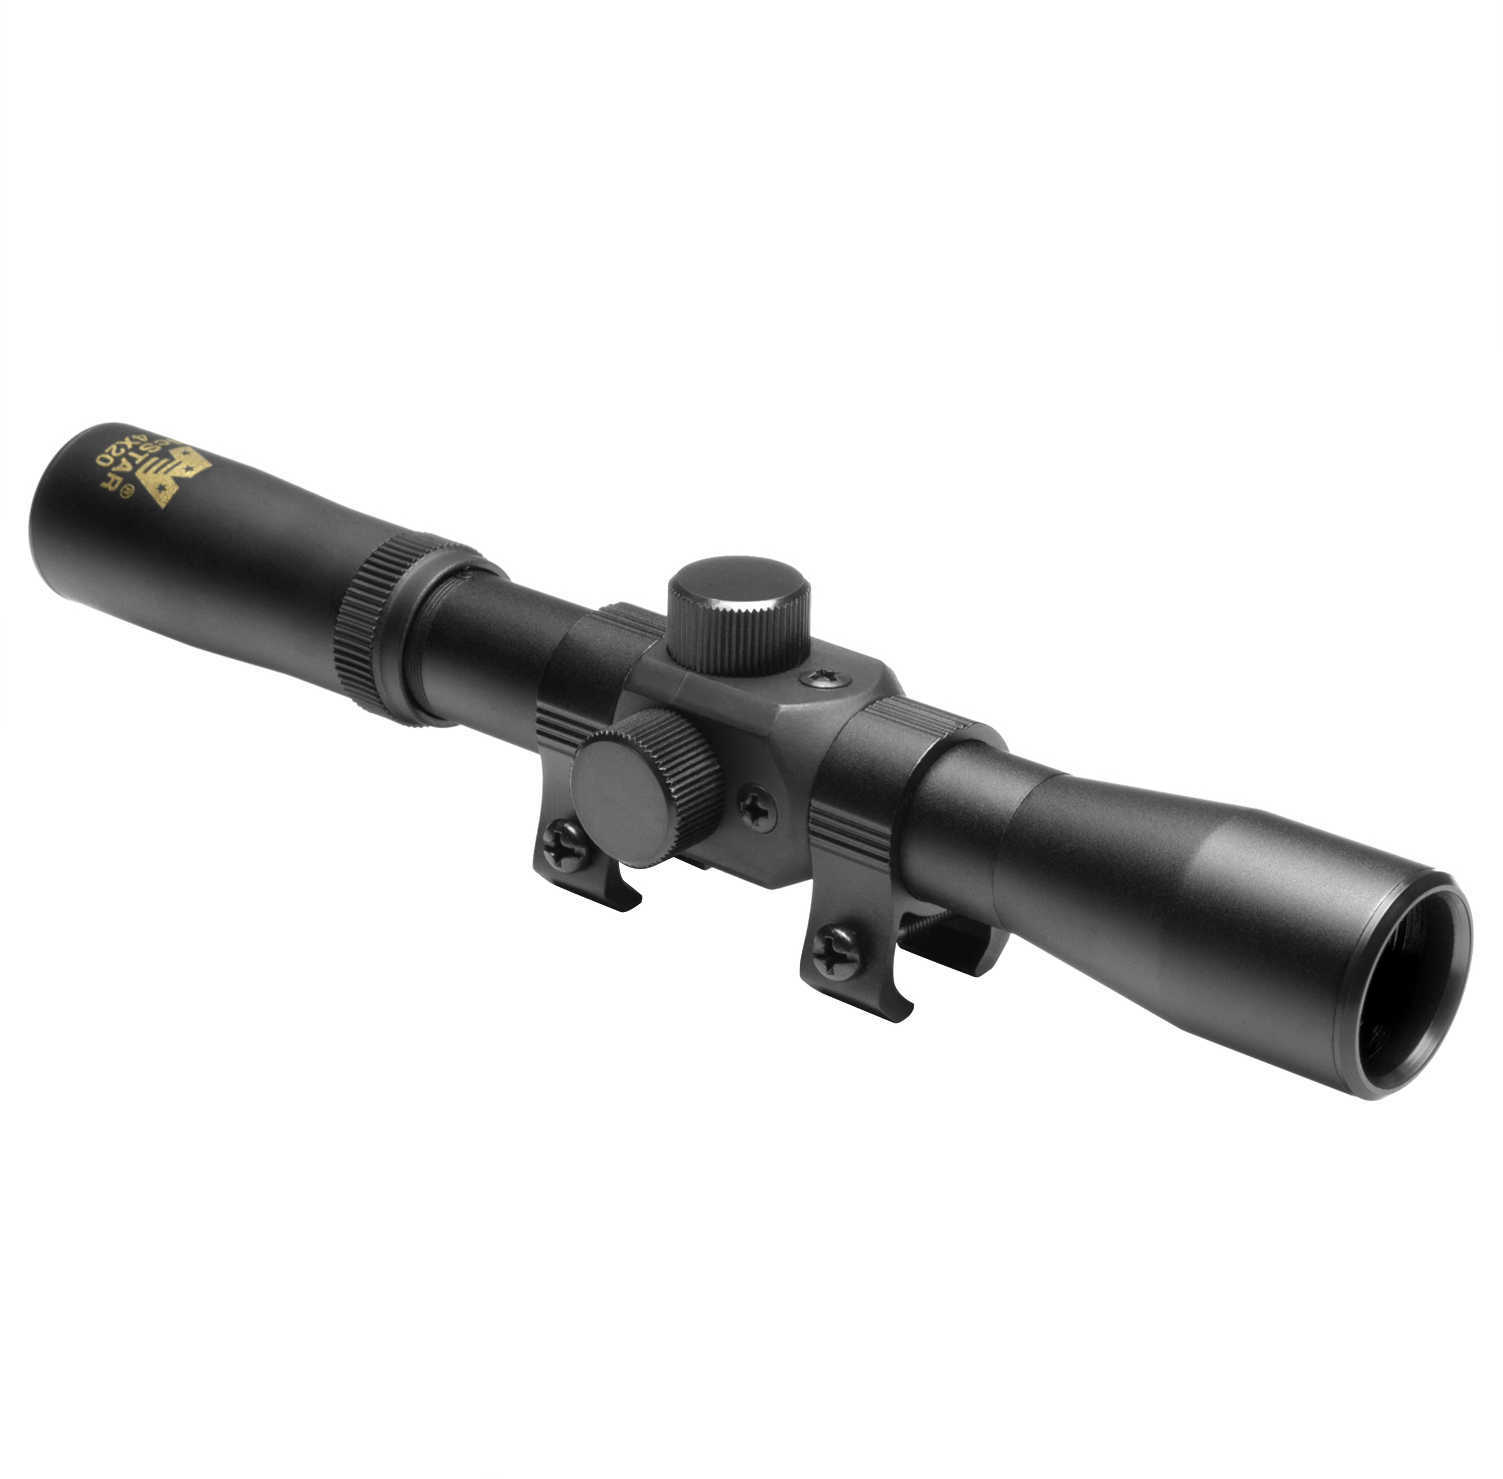 NCSTAR Compact Air Gun Scope 4X Magnification 20mm Objective Lens Plex Reticle Black Weighs 3.35oz SCA420B